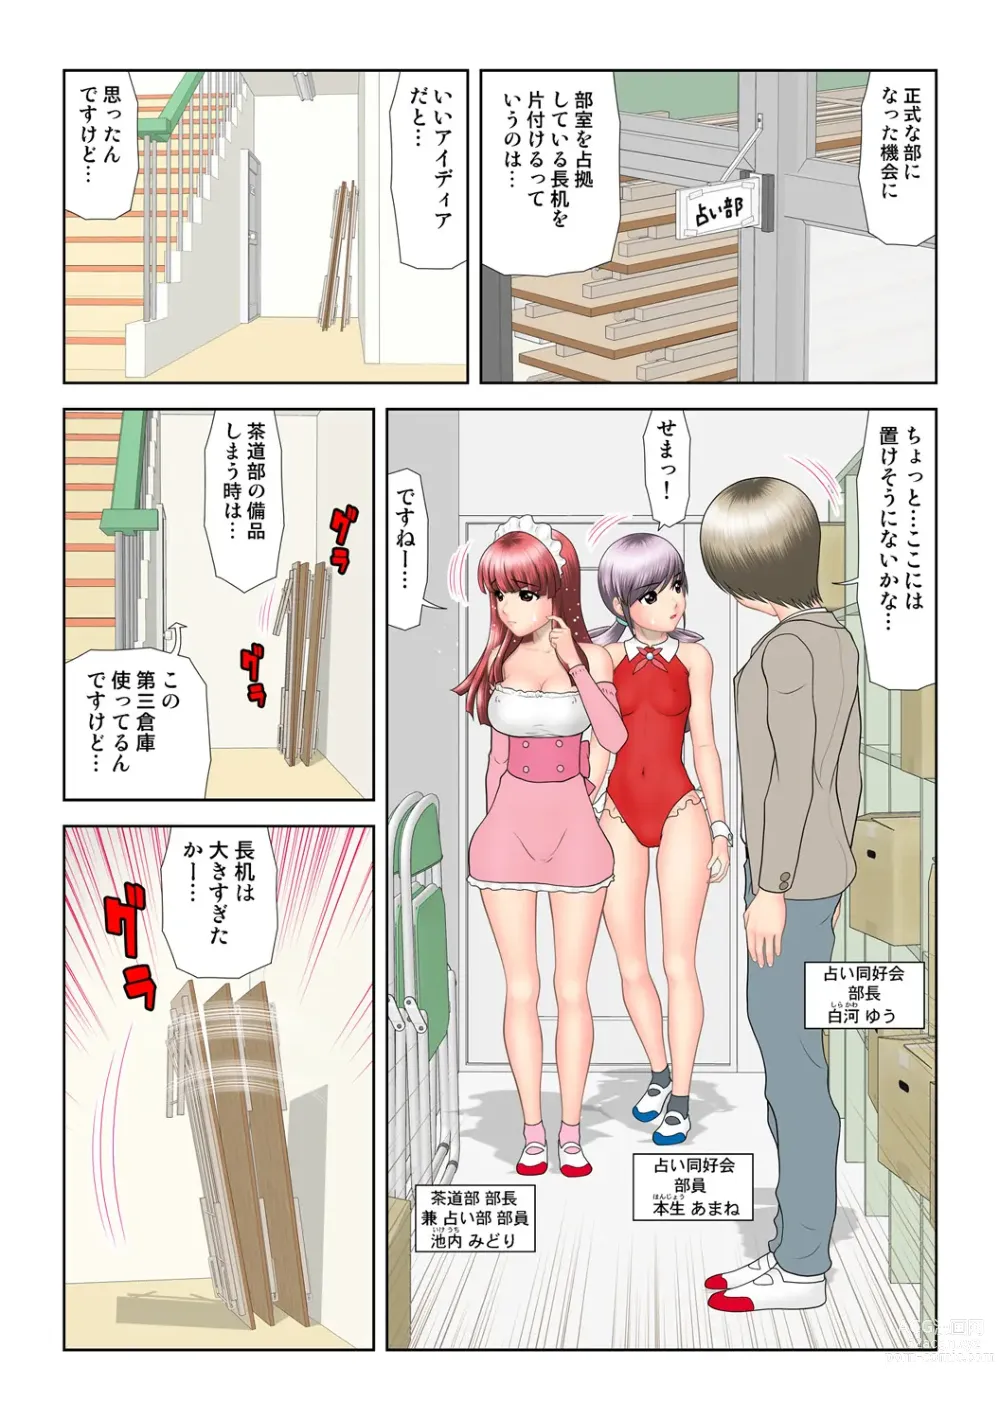 Page 104 of manga HiME-Mania Vol. 48